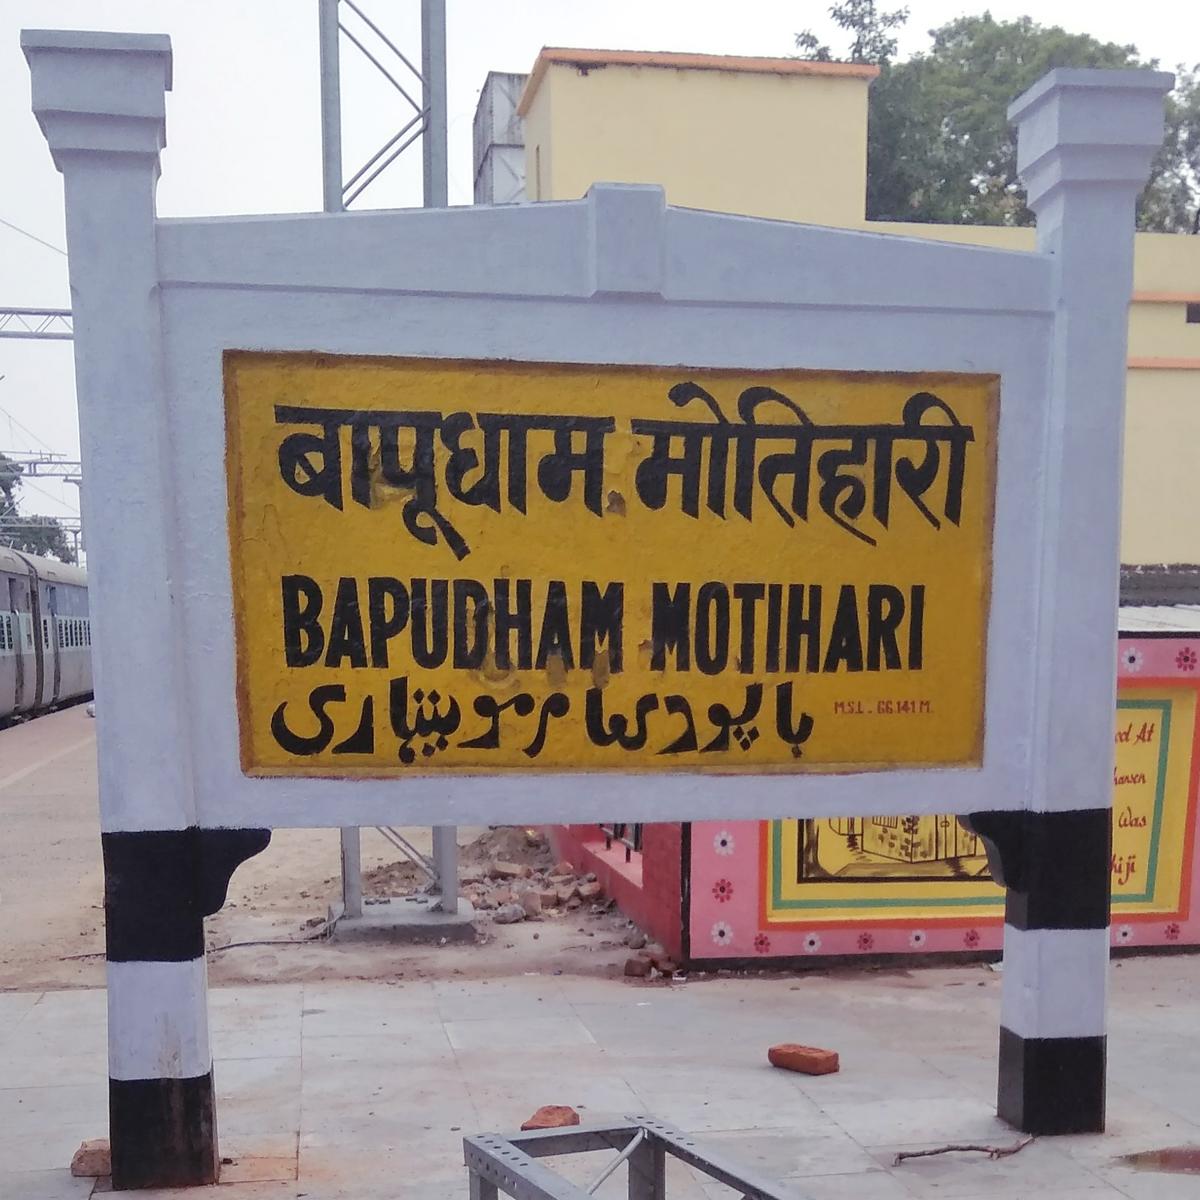 The train reaches Bapudham Motihari at 08.00